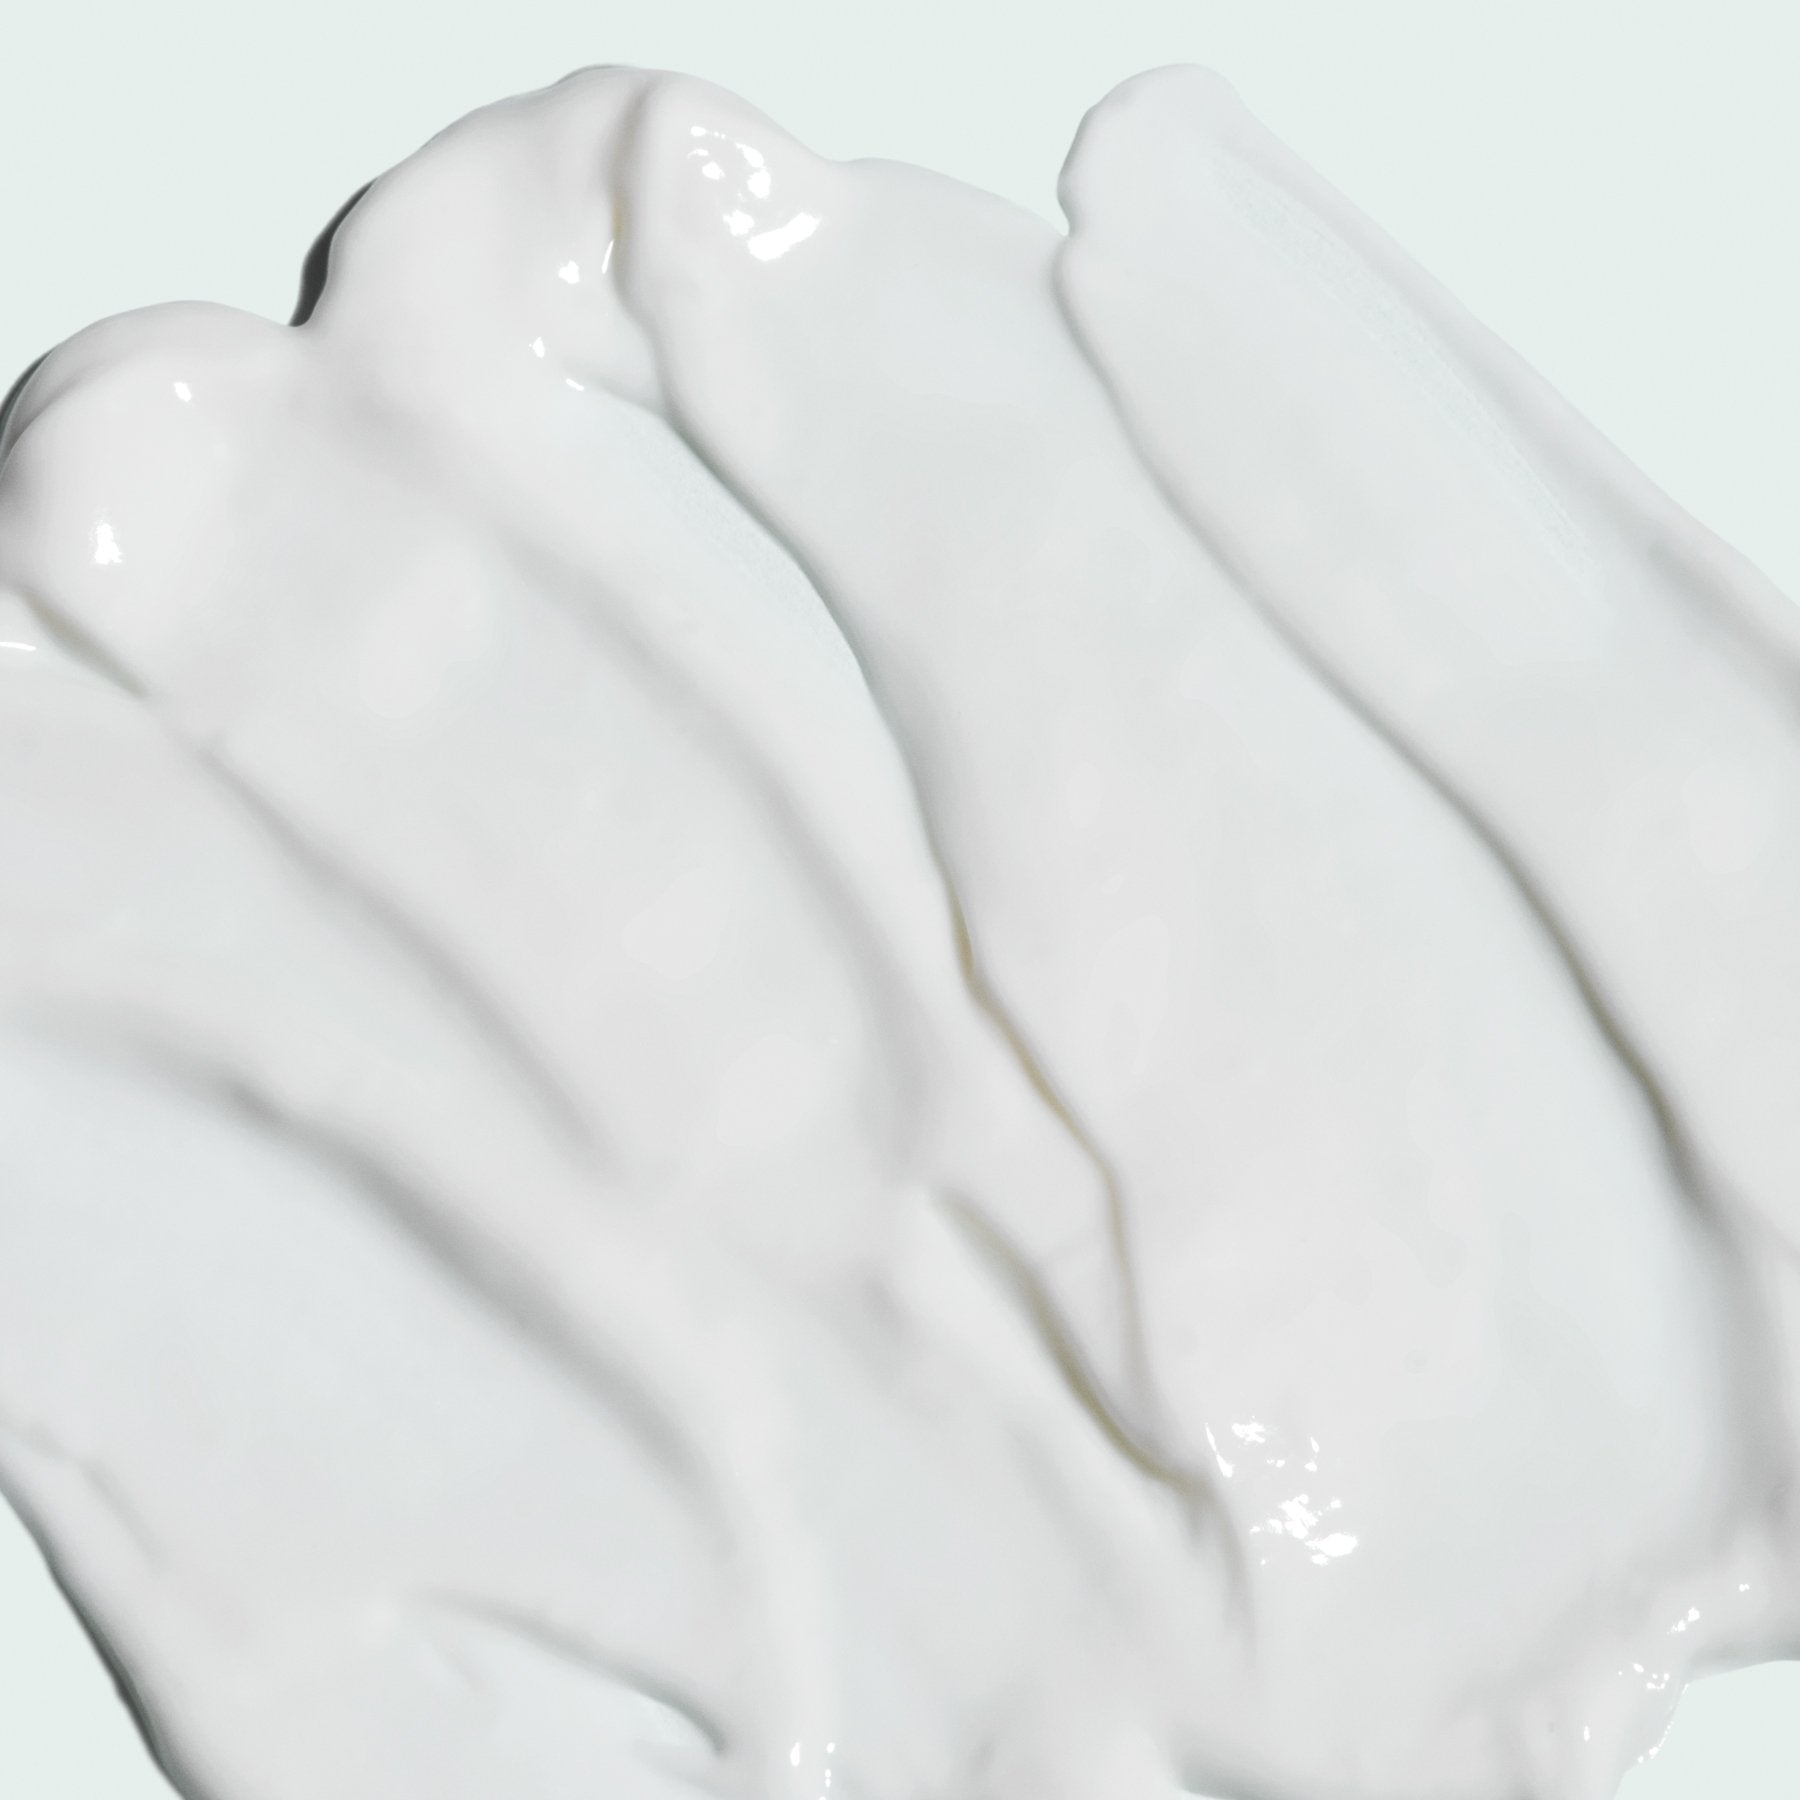 ILUMA intense brightening crème | IMAGE Skincare